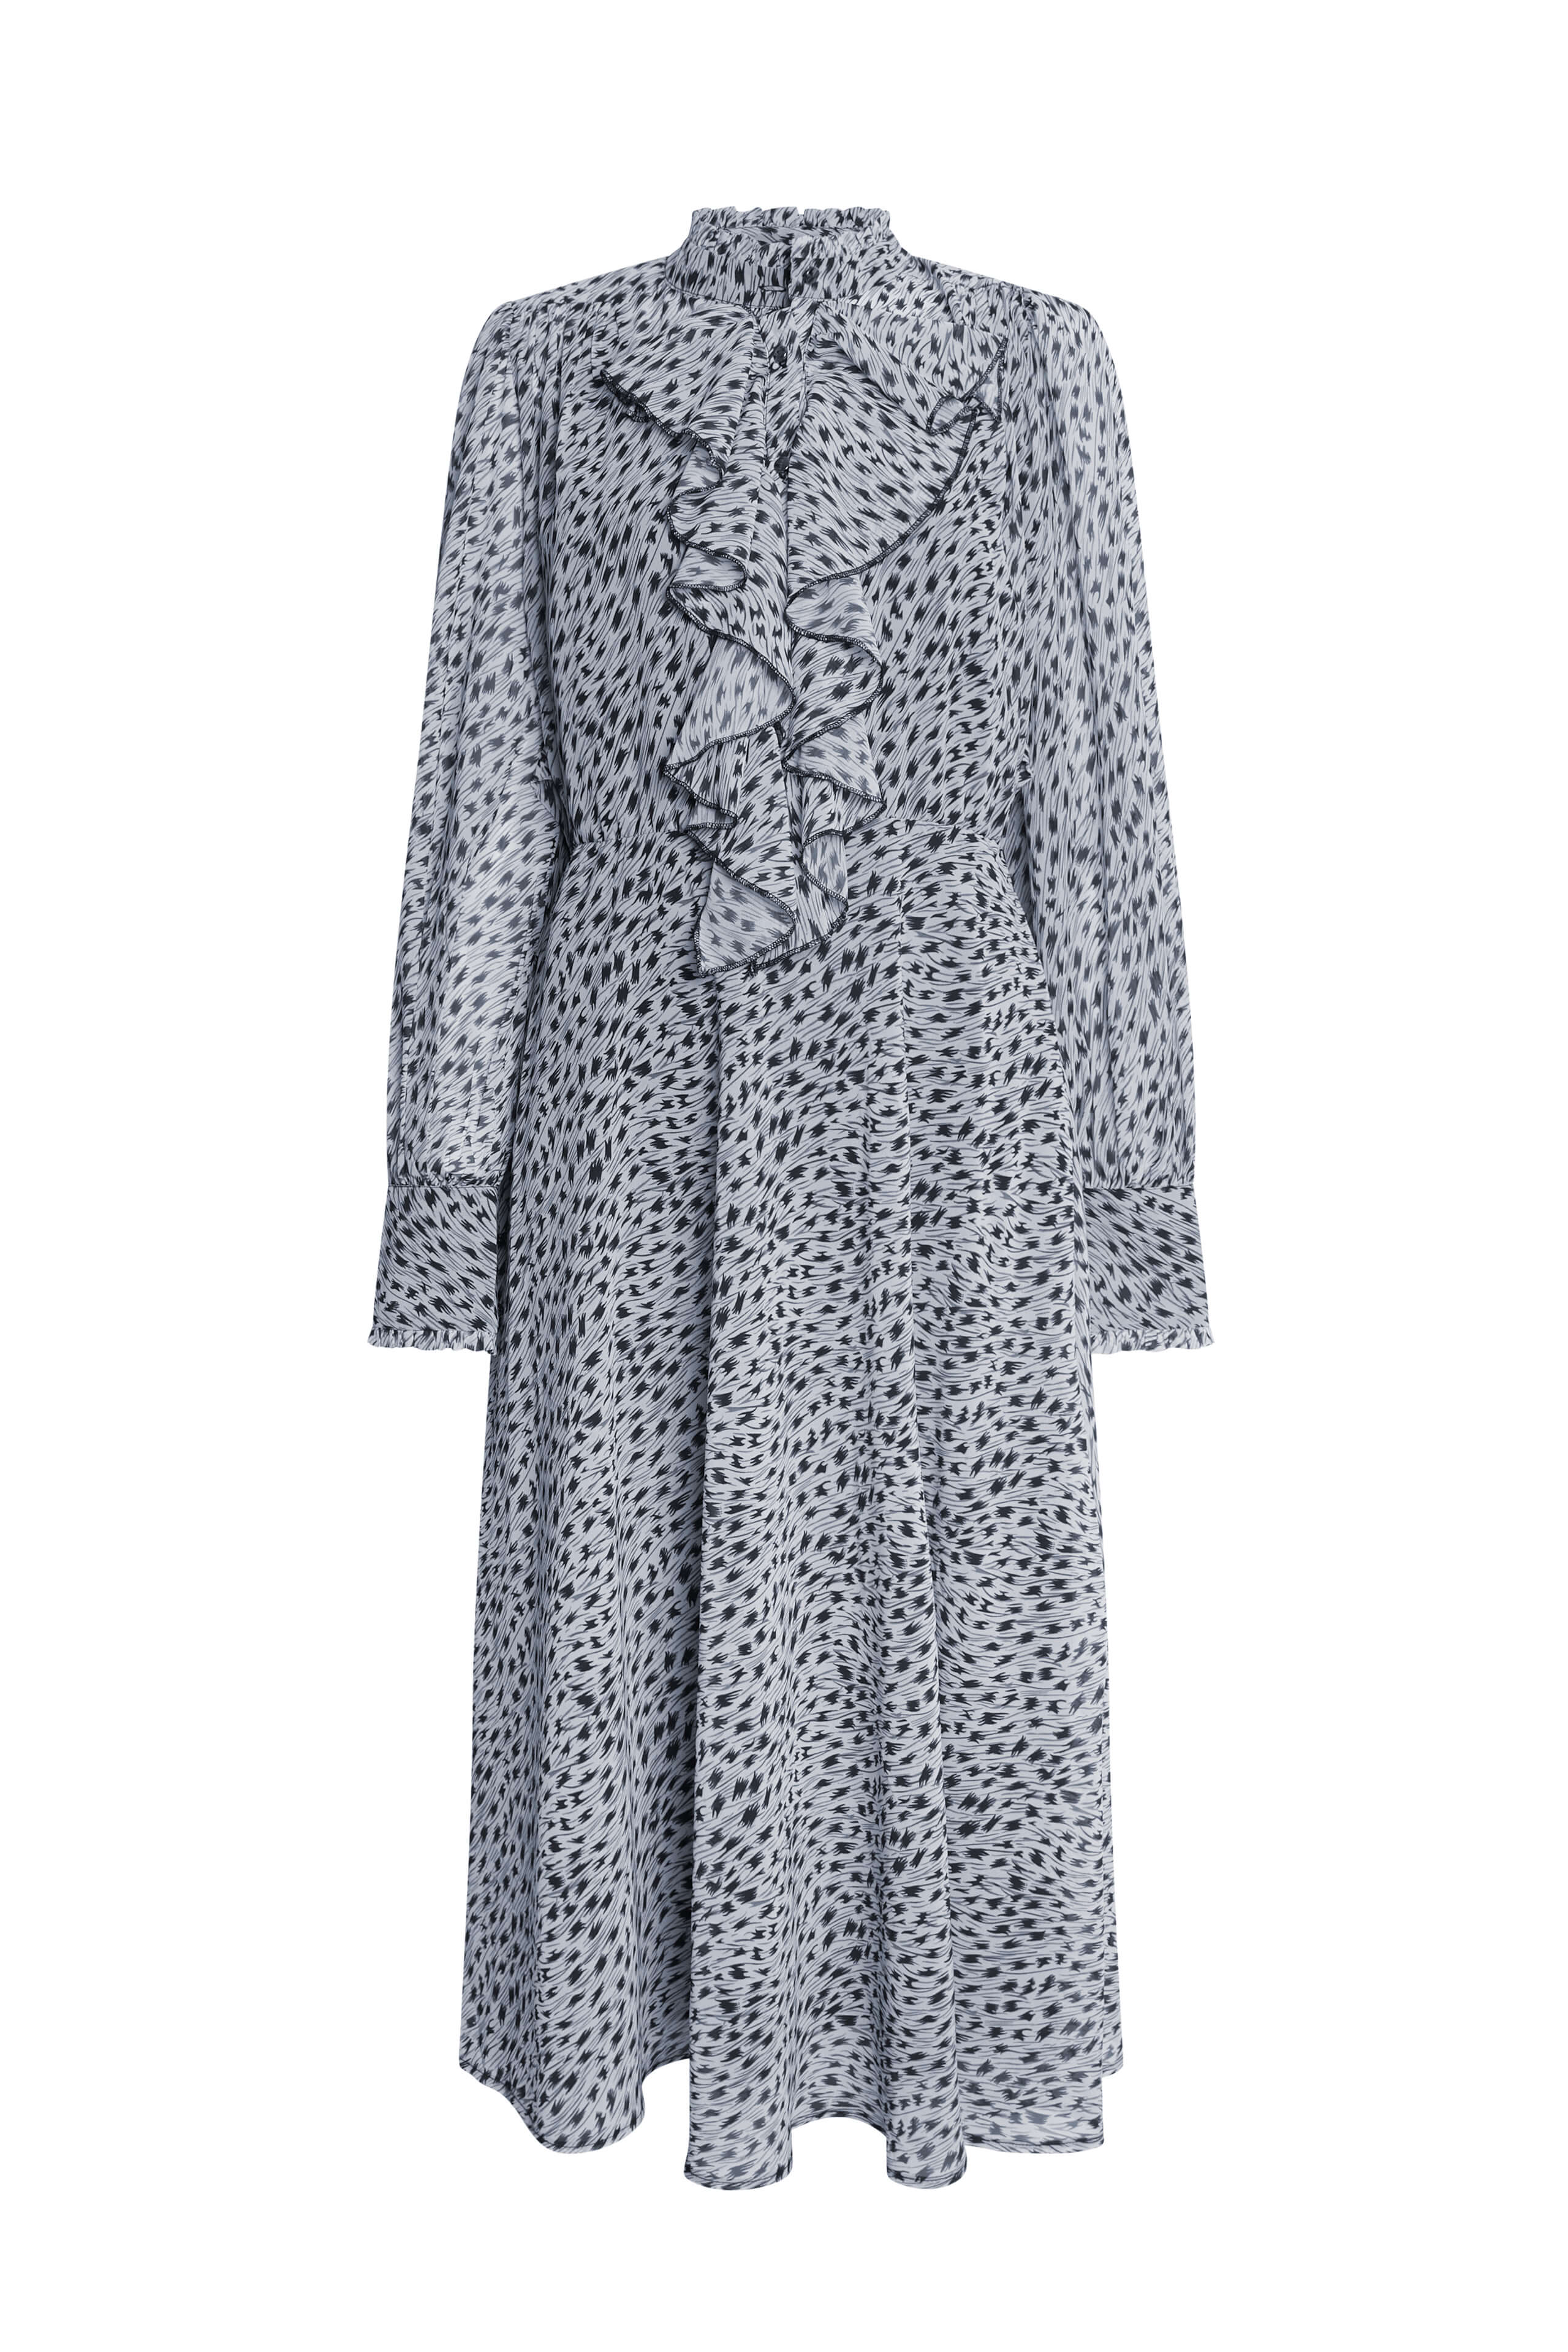 James Lakeland Women's Grey Printed Front Ruffle Midi Dress In Gray